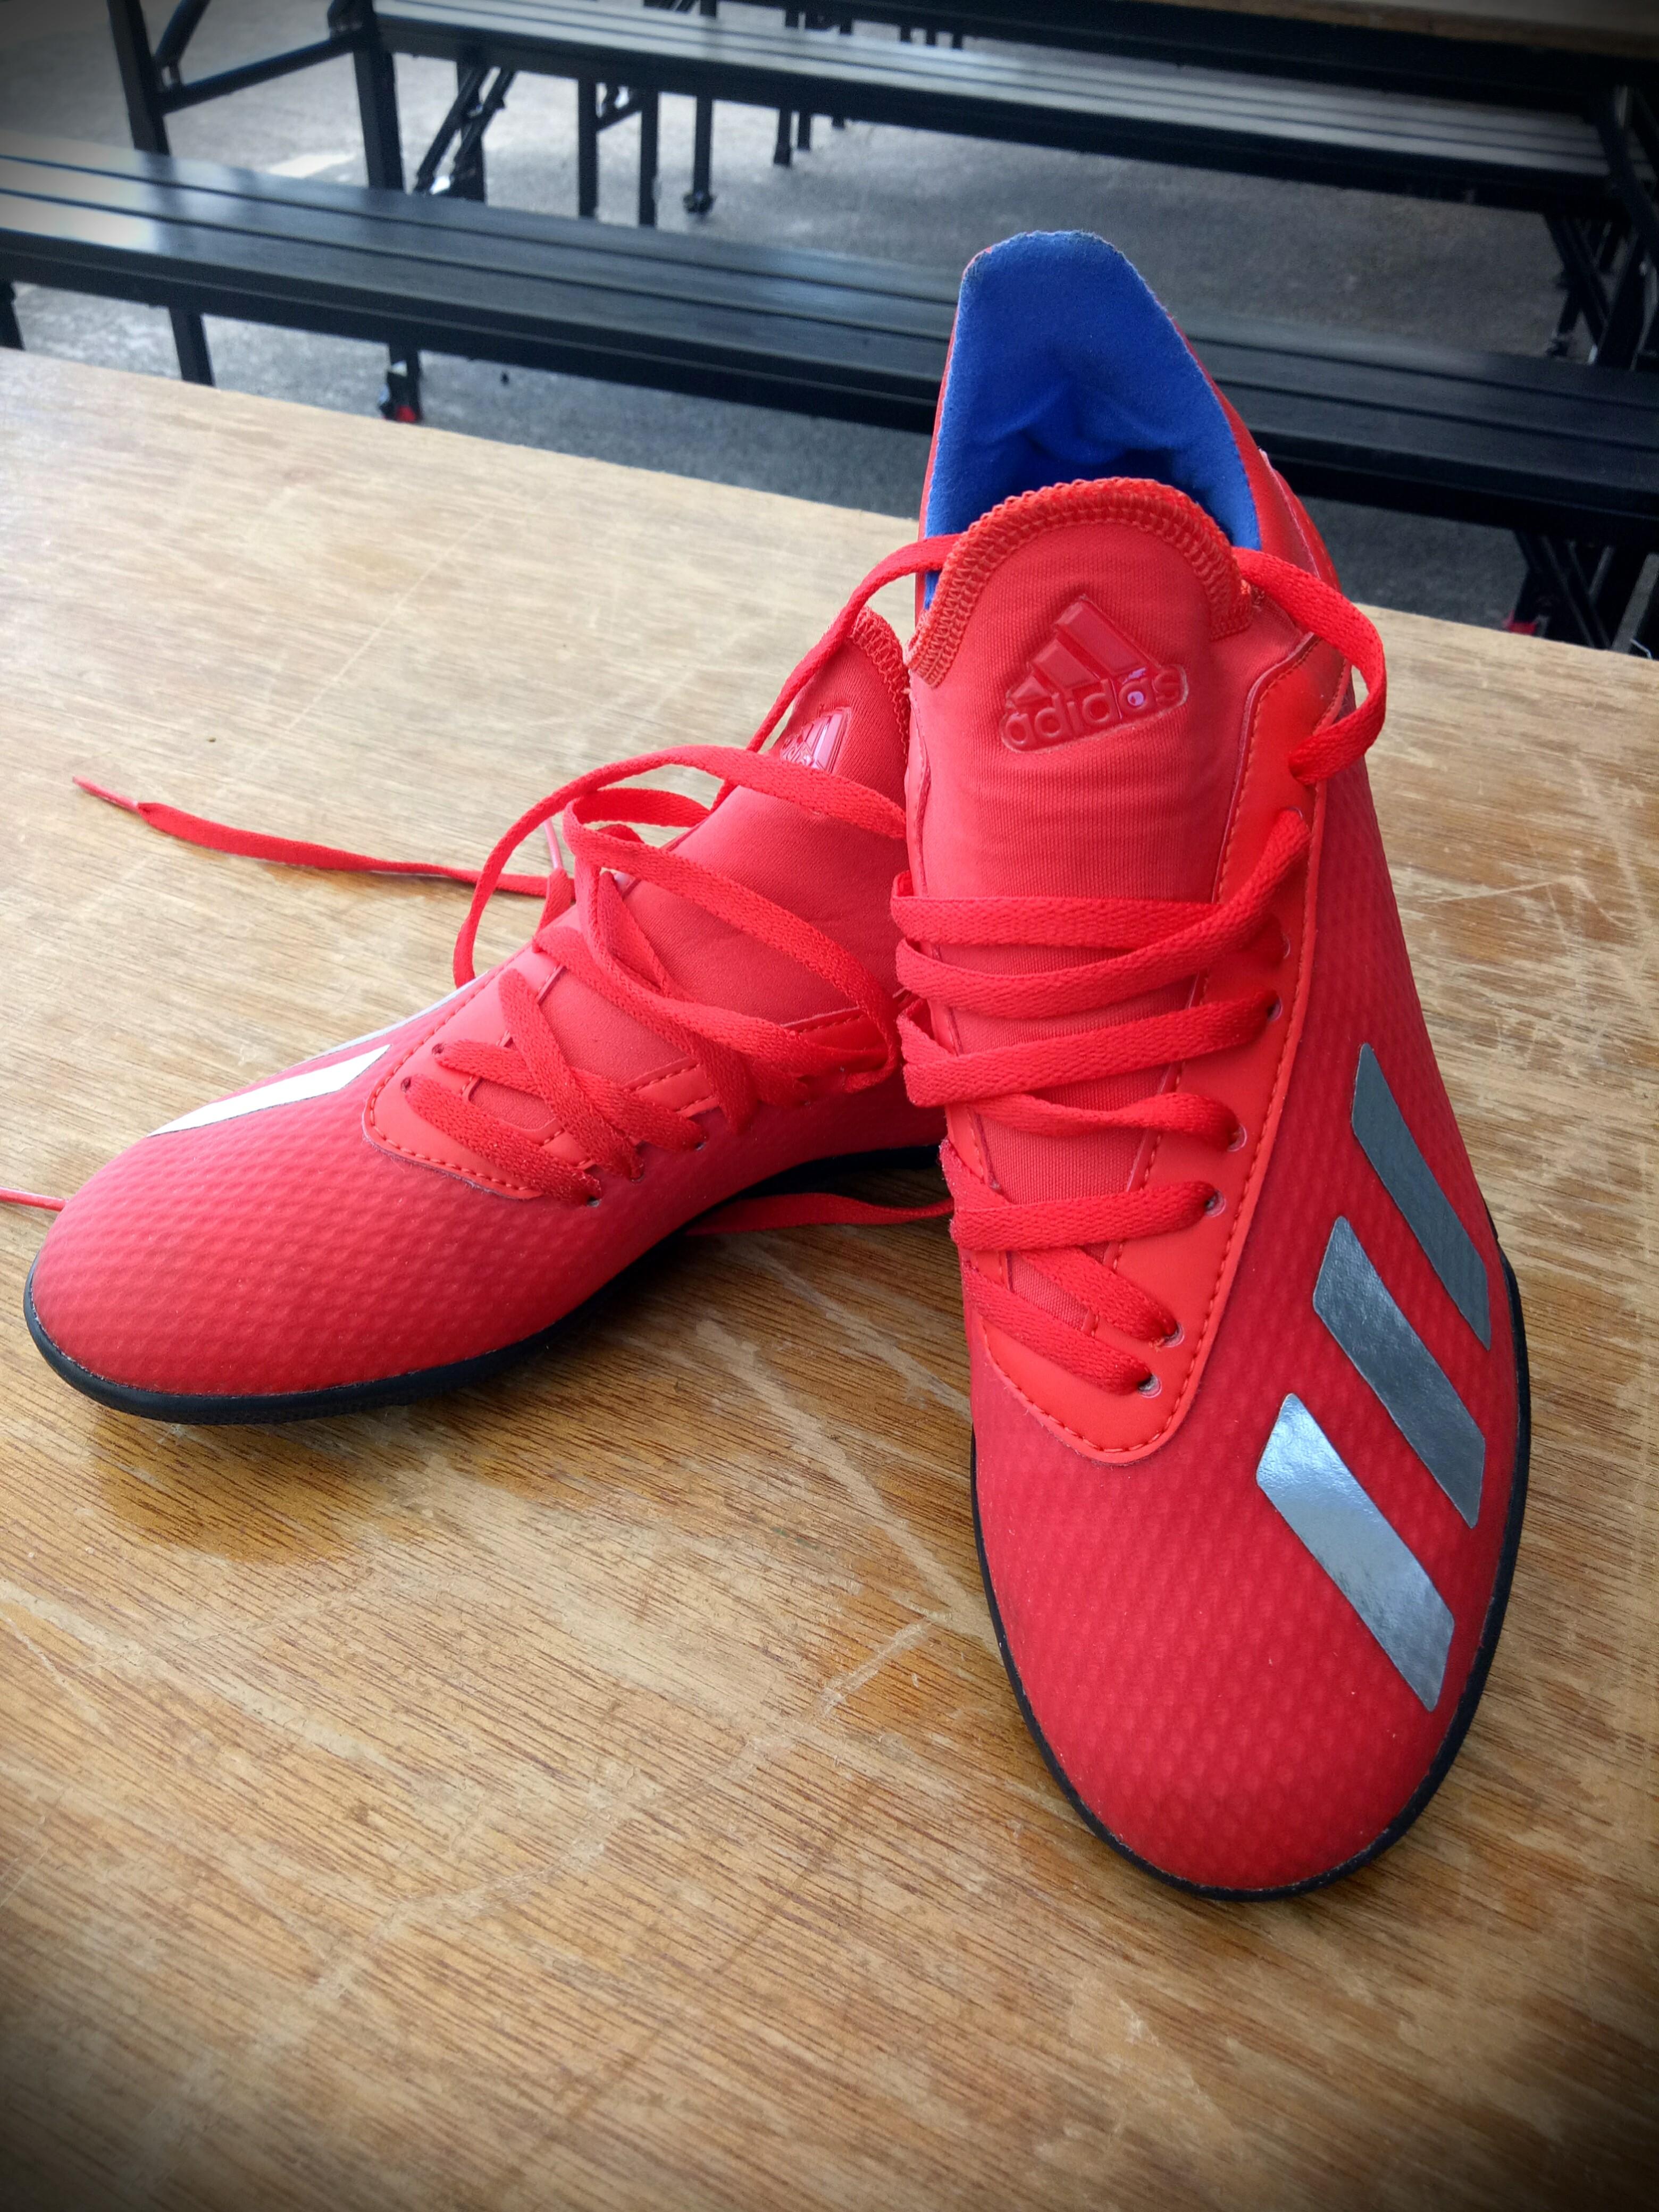 new adidas futsal shoes 219